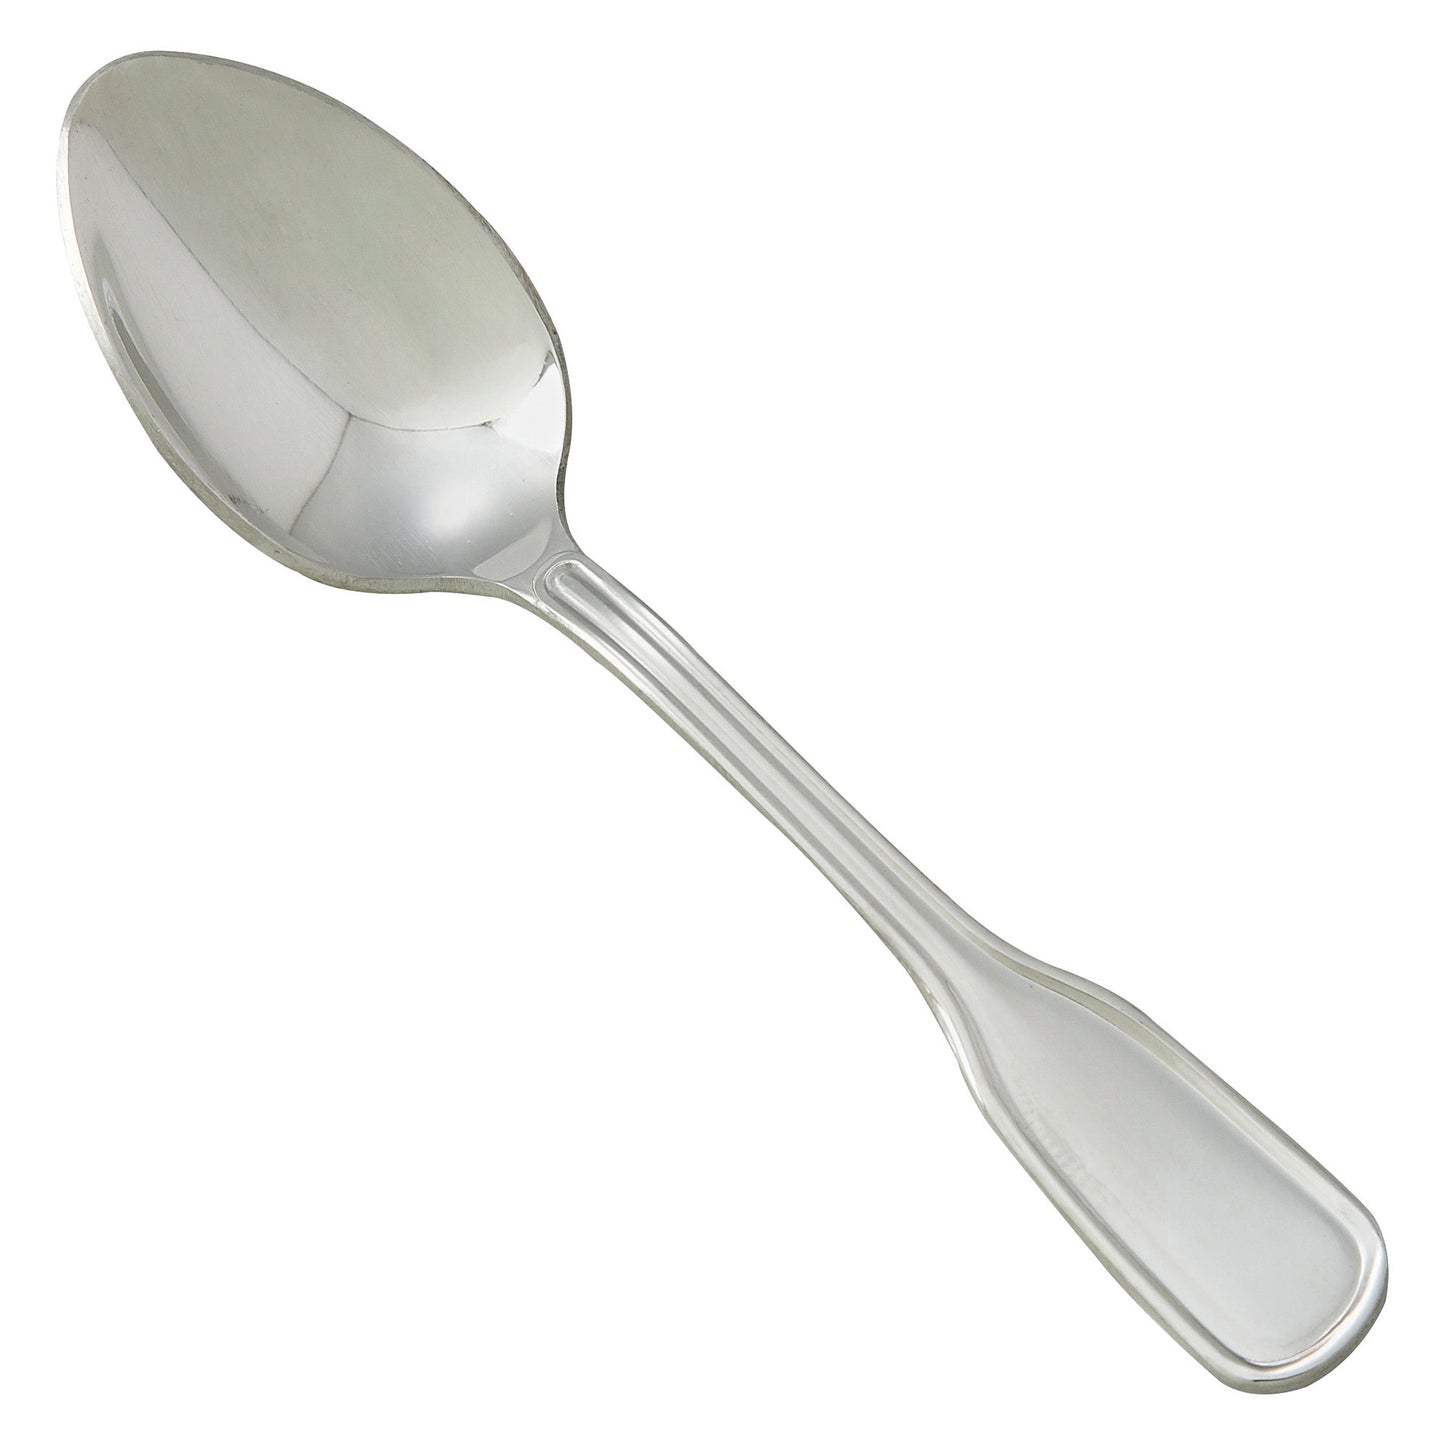 0033-09 - Oxford Demitasse Spoon, 18/8 Extra Heavyweight